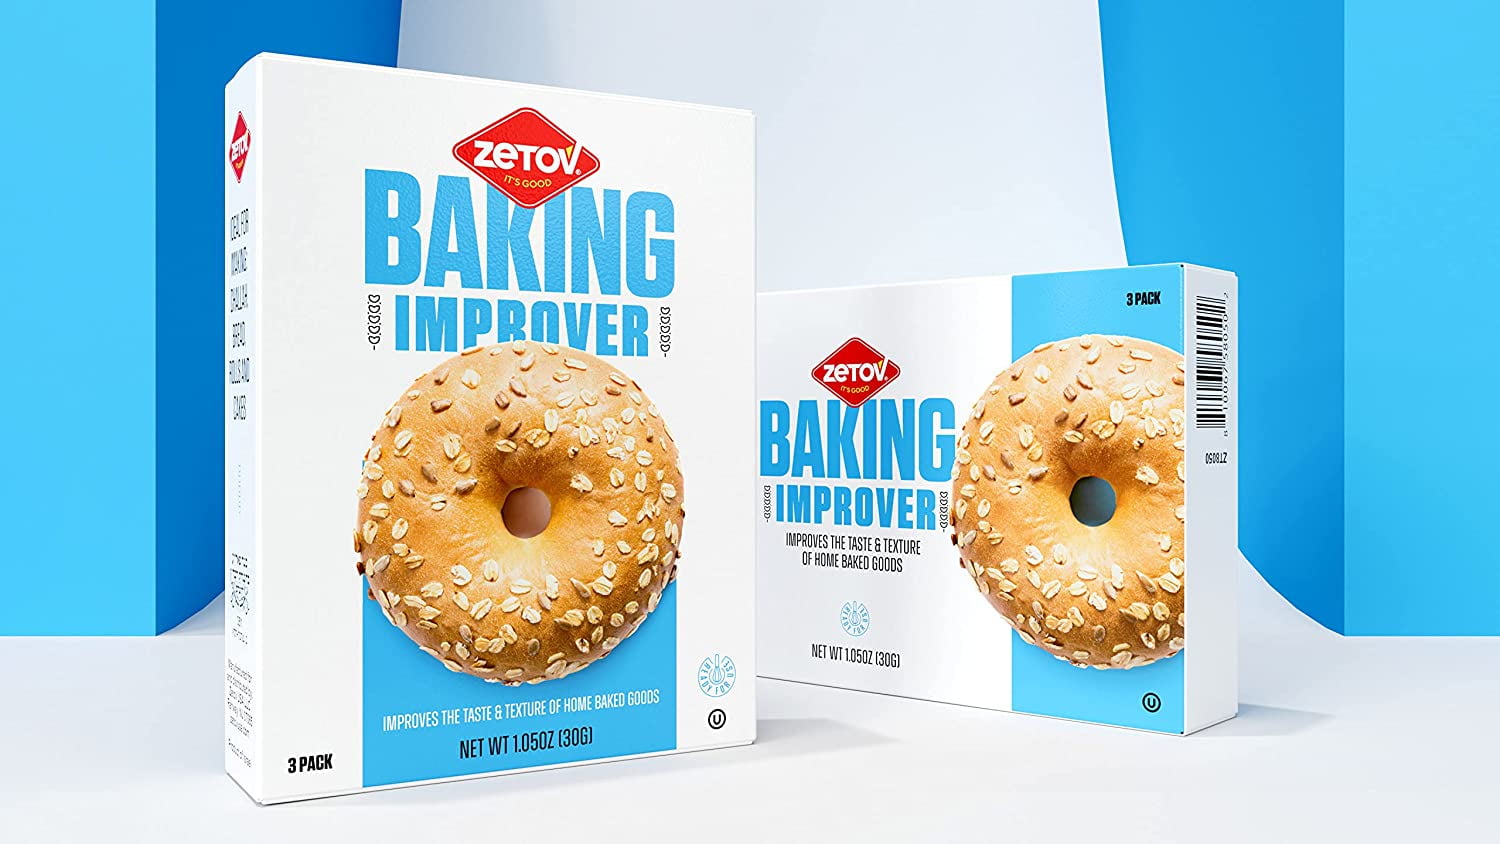 Dough Conditioner Bread Improver & Enhancer for Baking | (1 lb) Professional Gourmet Grade Dough Baking Enhancing | for Any Bakery Recipe, Improve